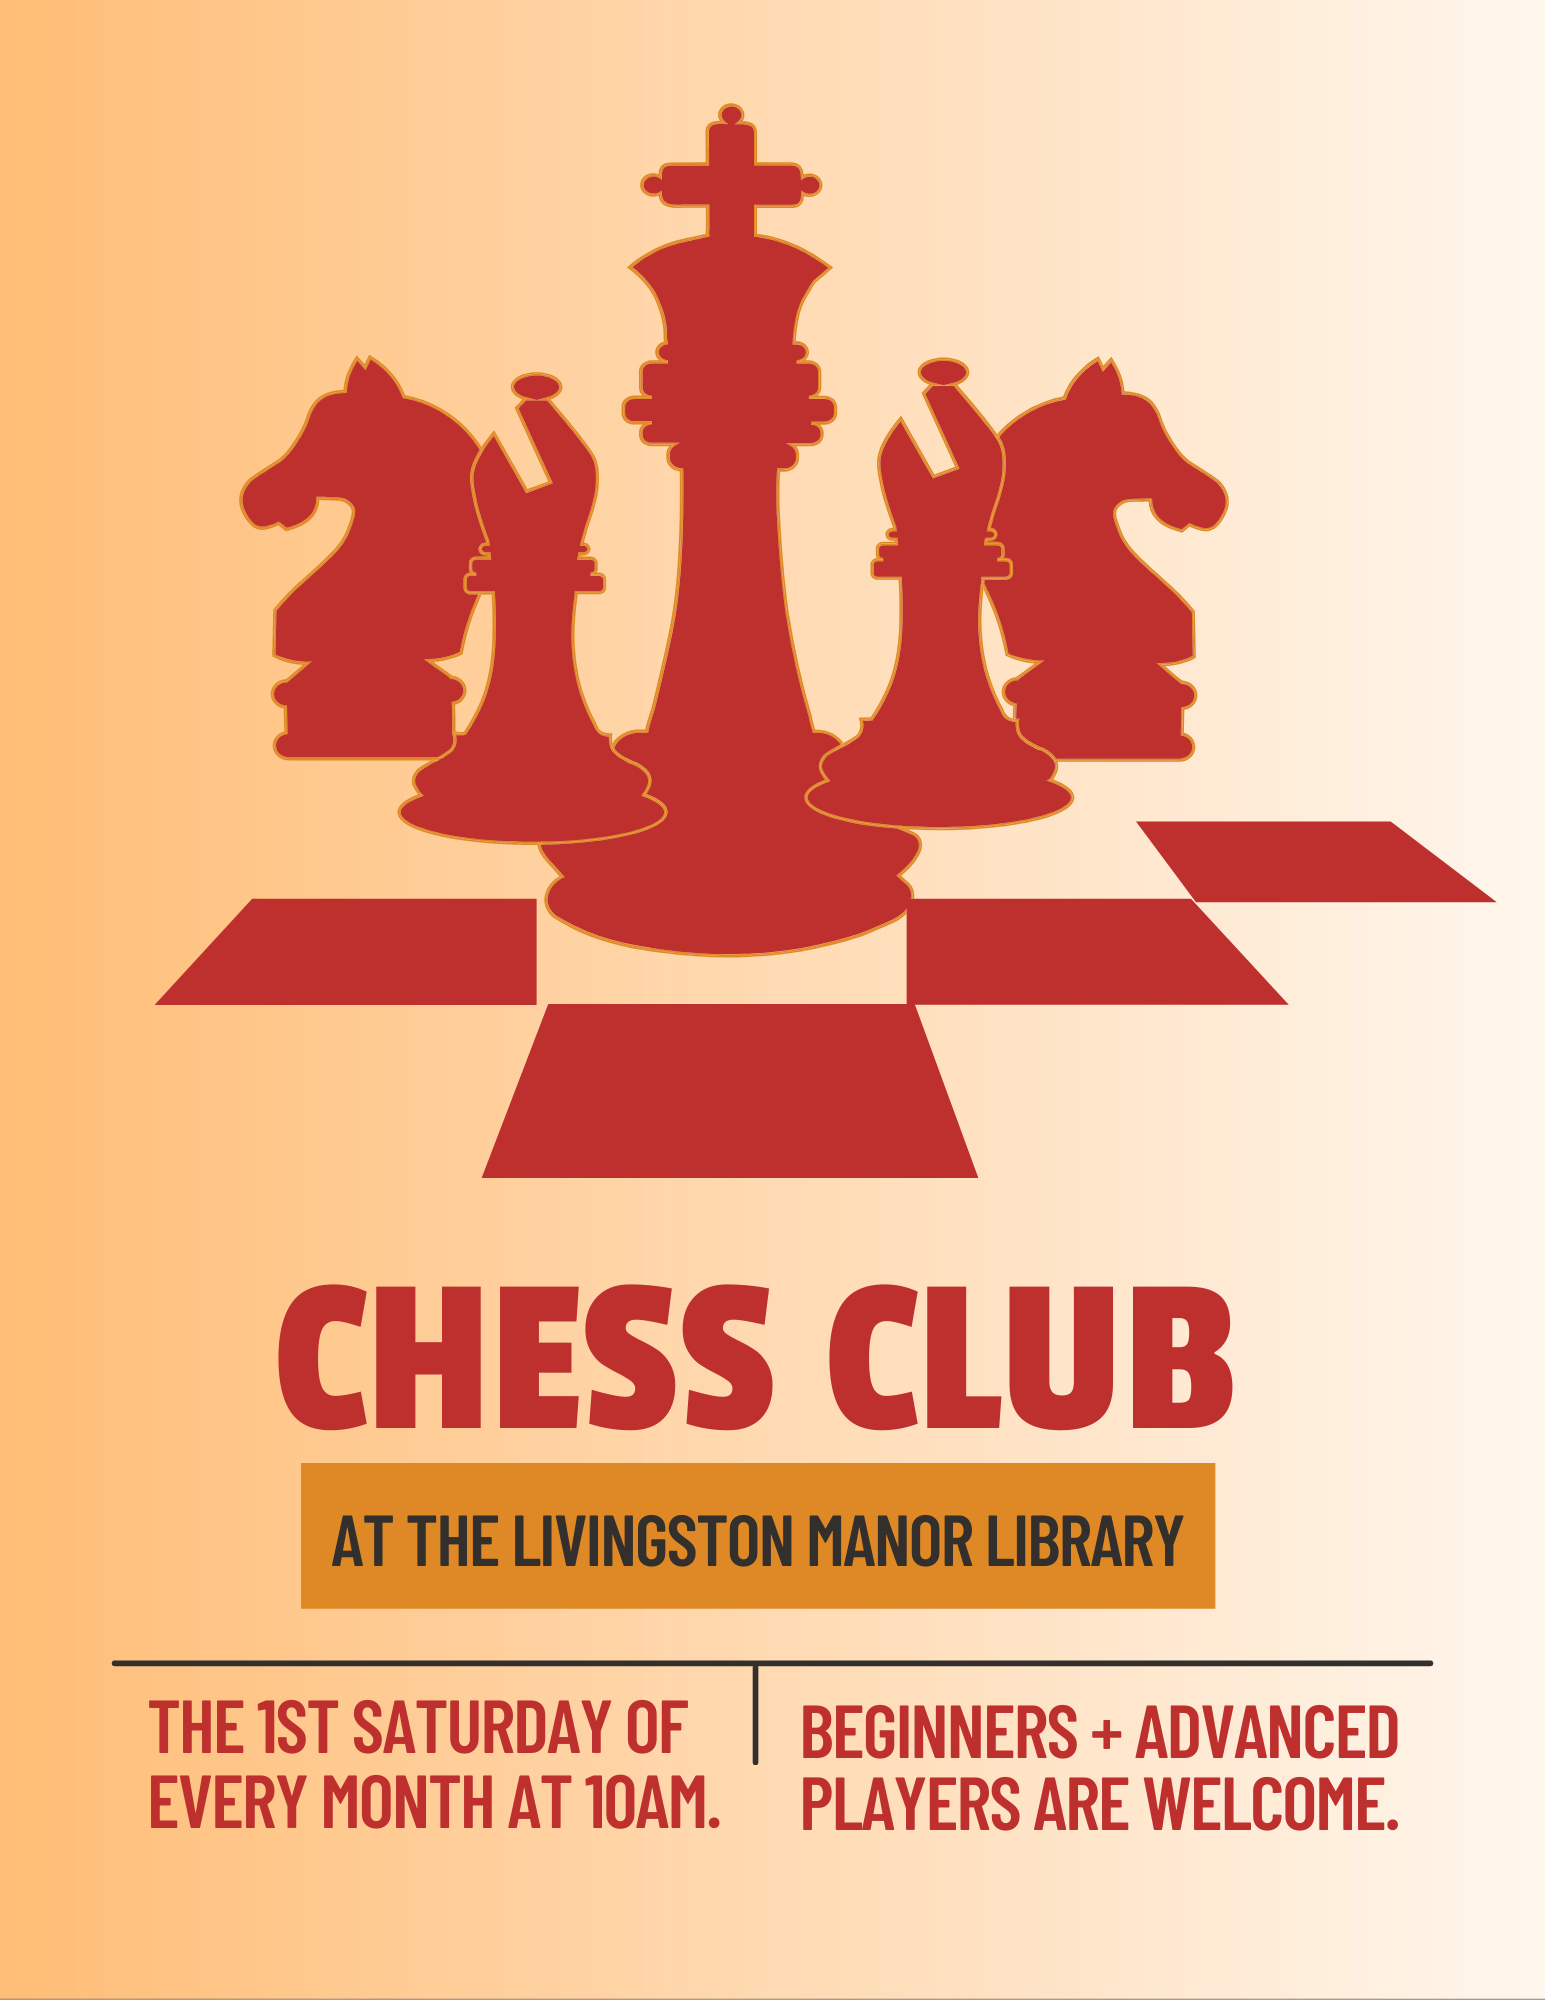 New! Chess Club – Coburn Free Library